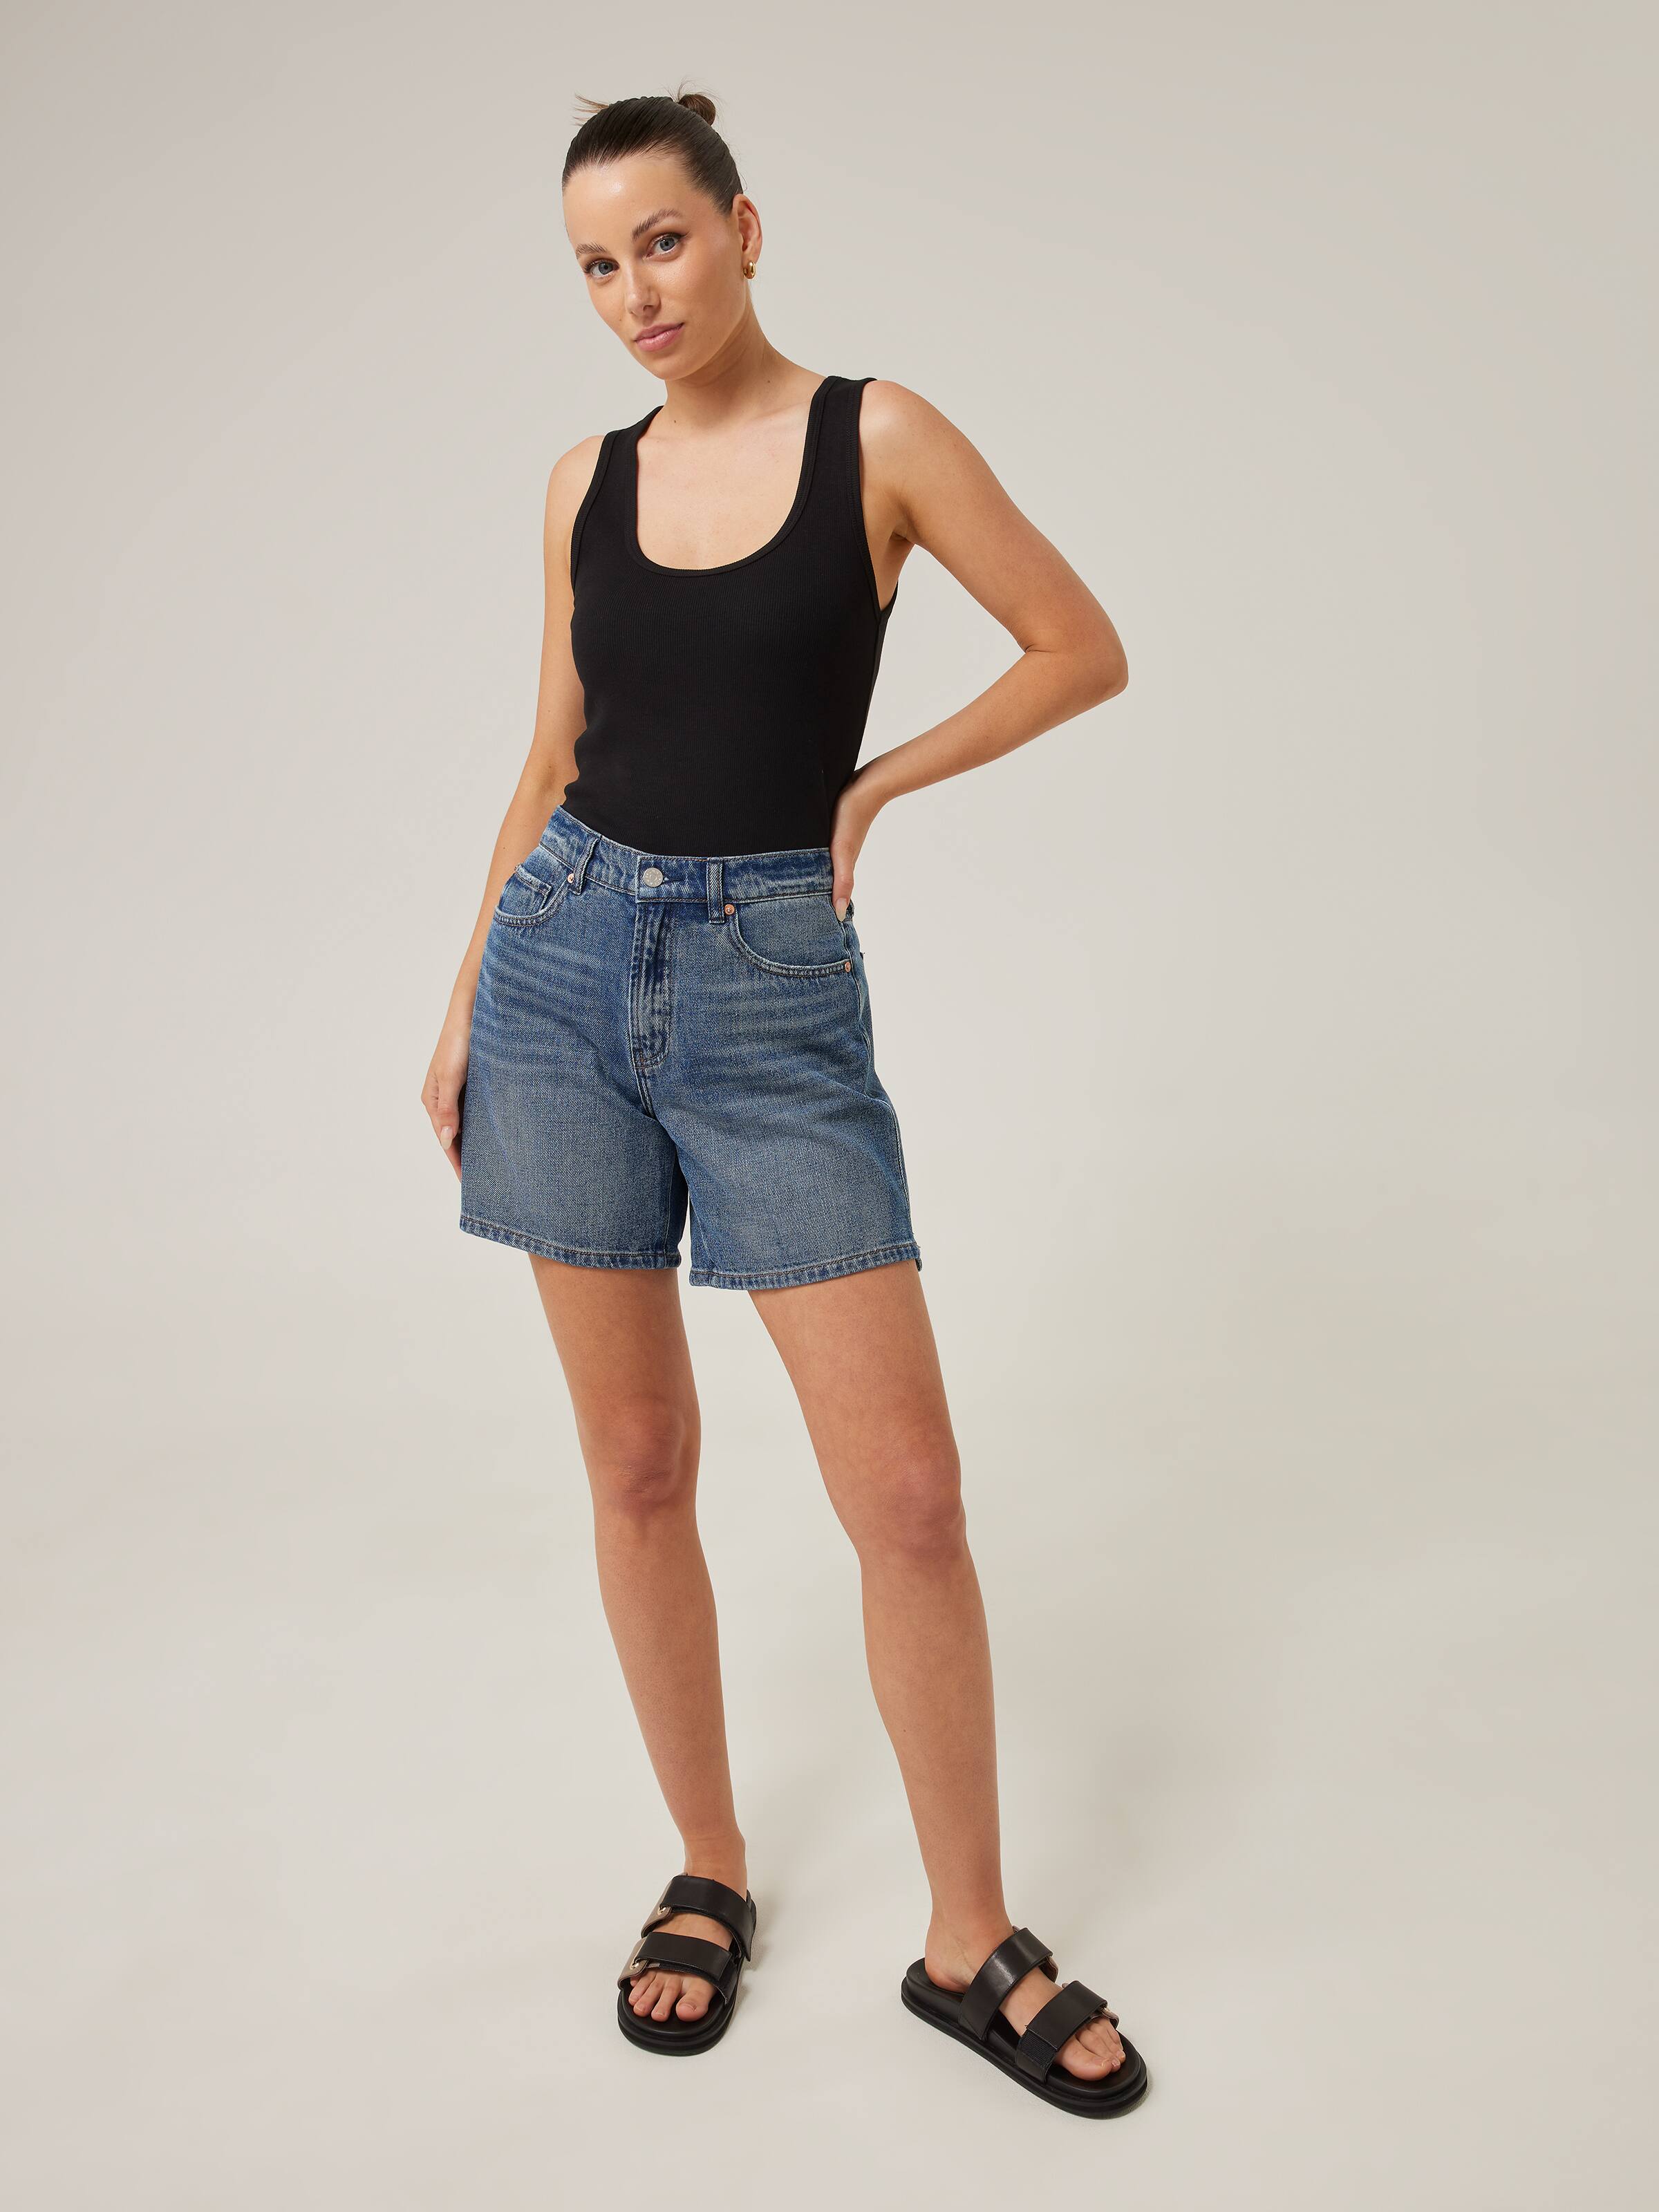 New Women Denim Shorts Low Waist Frayed Ripped Super Short Mini Skinny  Dance Beach Hot Pants 